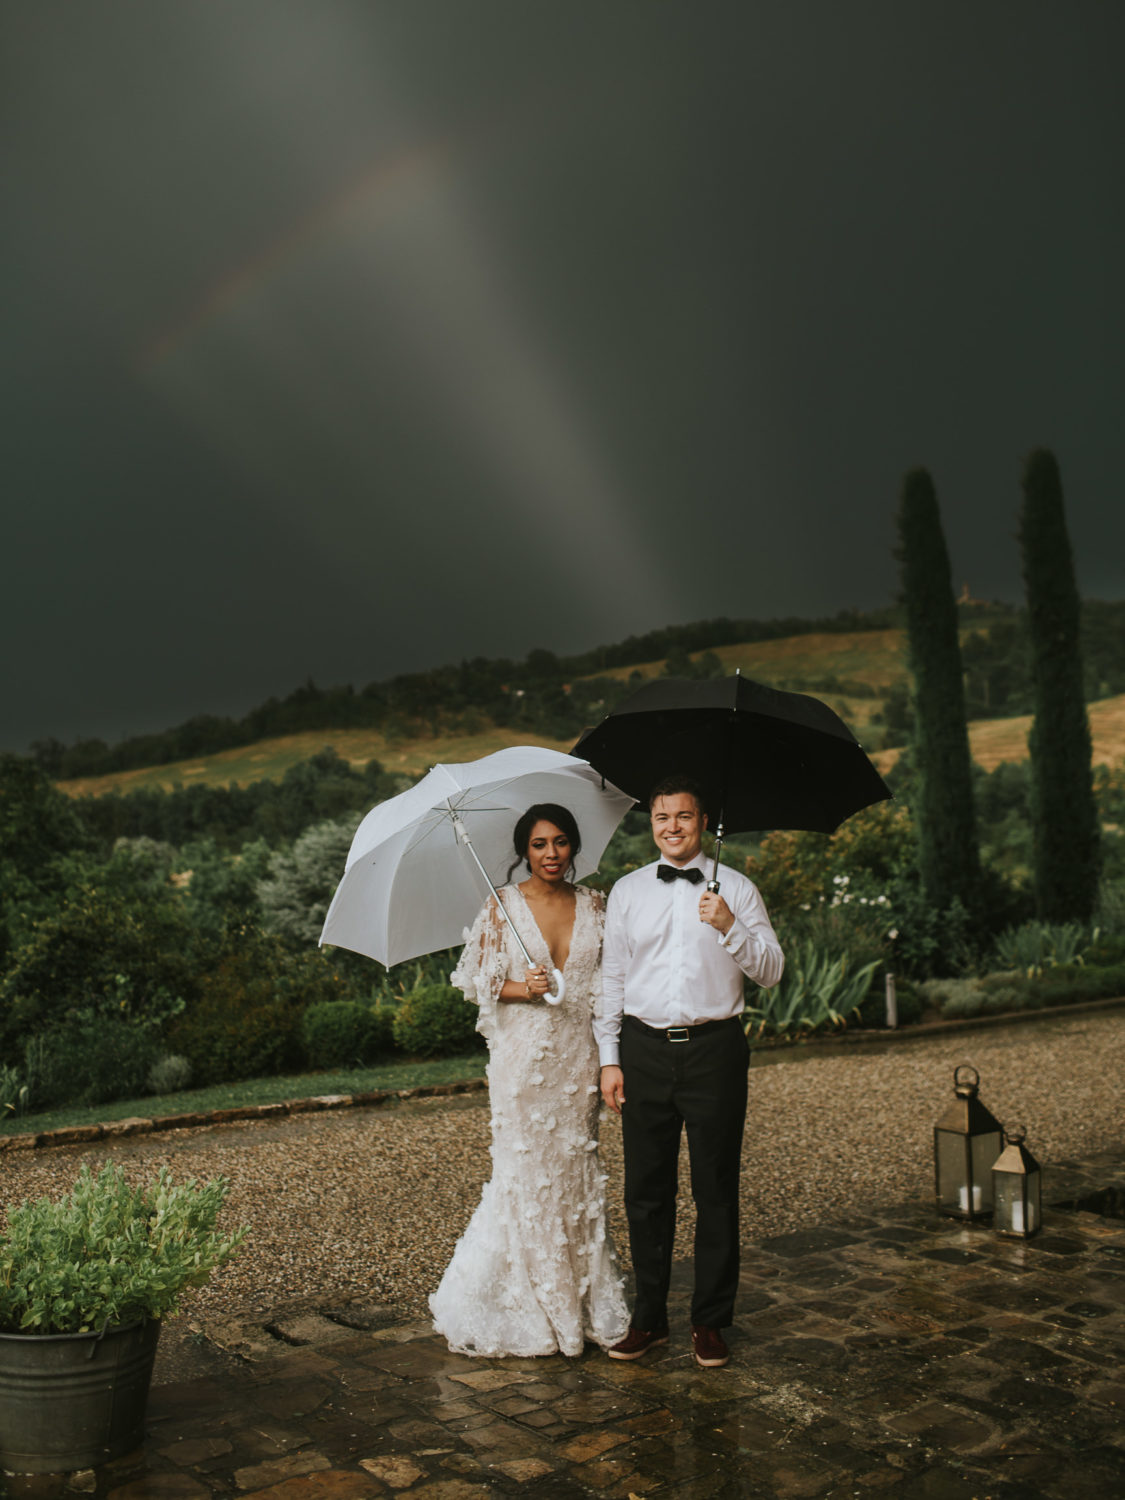 raindy wedding at castello di tassara